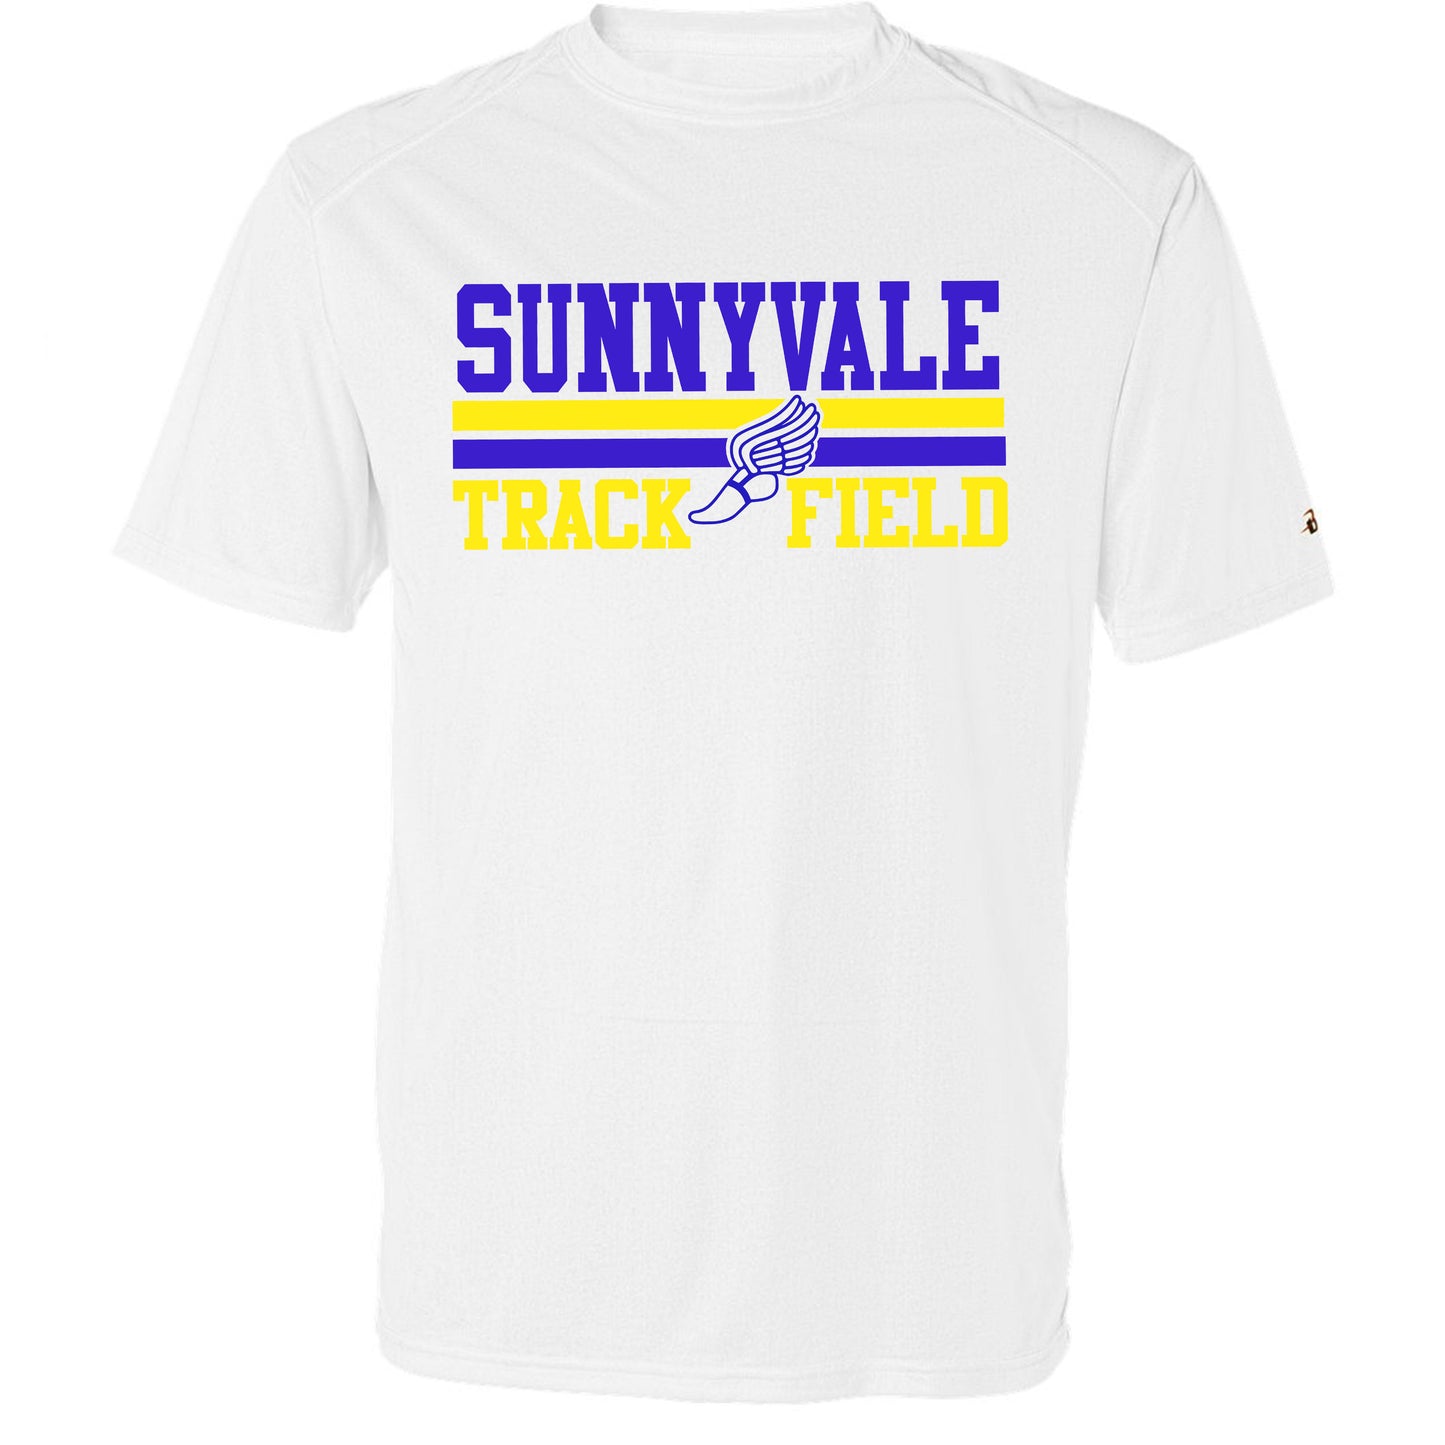 Sunnyvale Track & Field - white